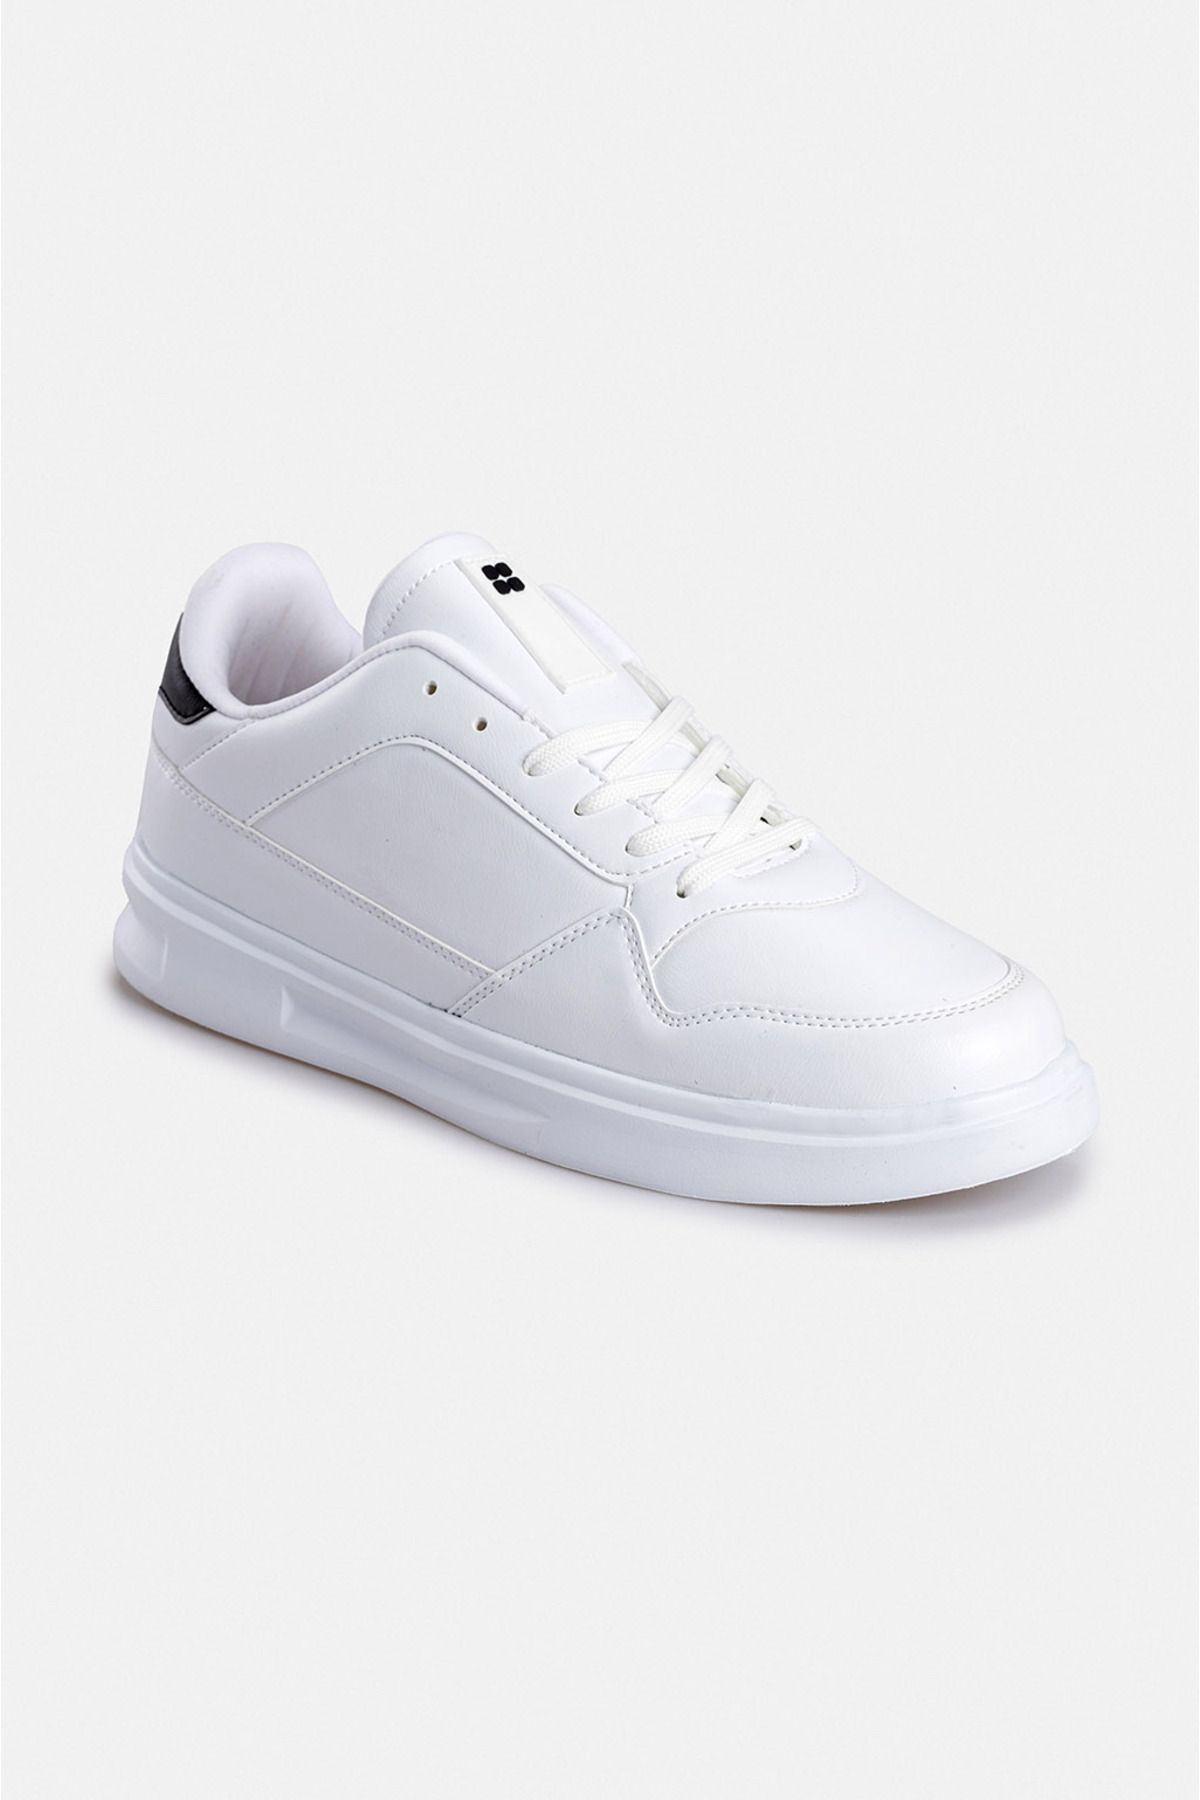 Avva Erkek Beyaz Parçalı Esnek Taban Sneaker A31y8068